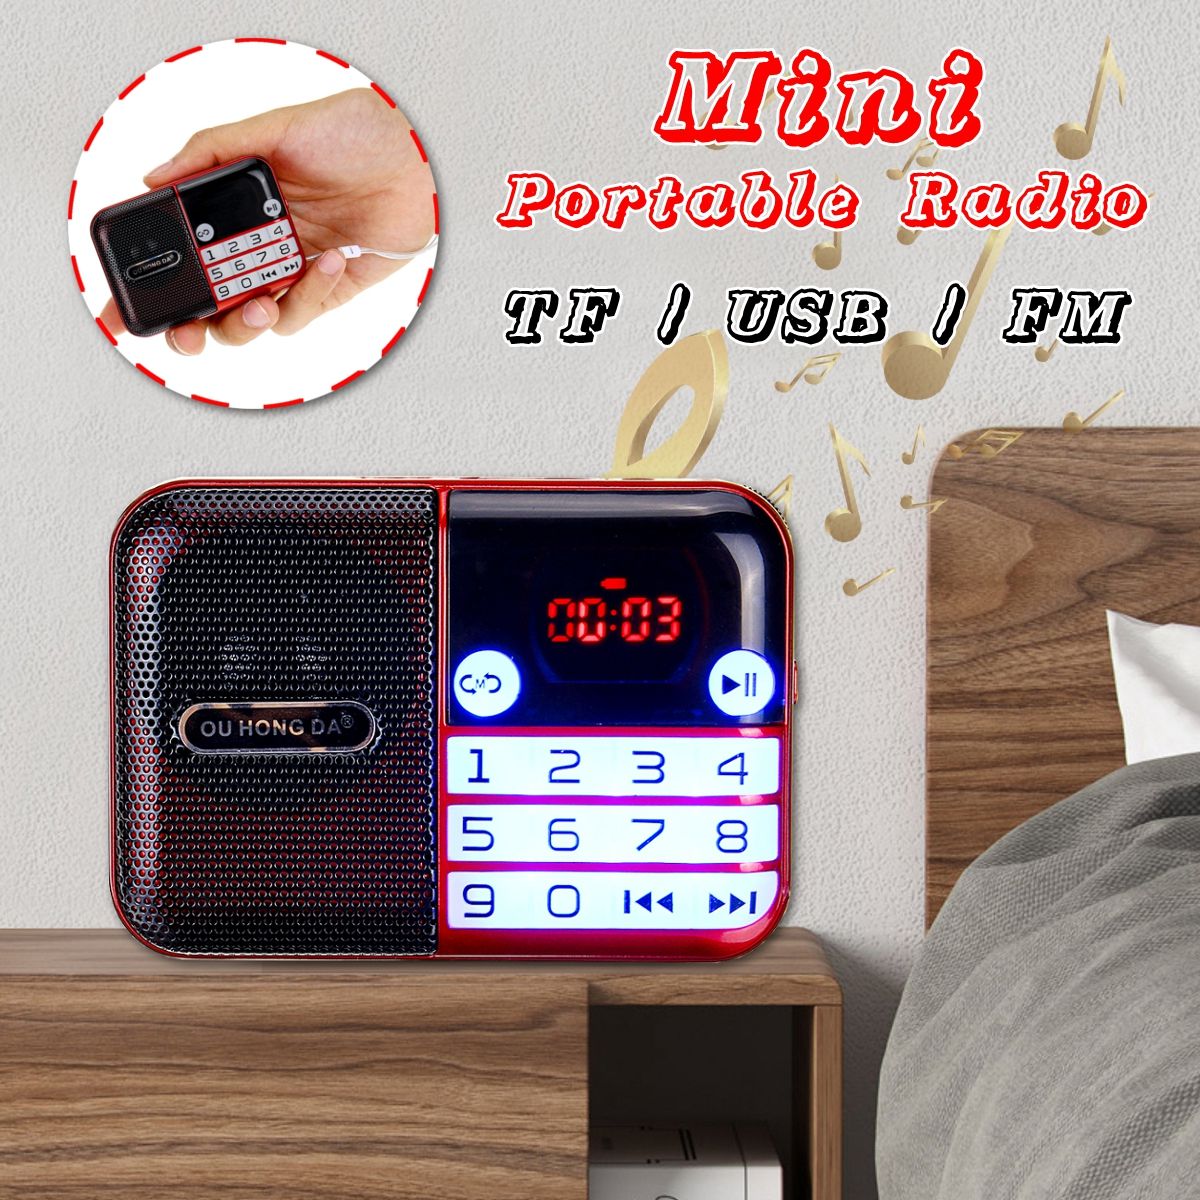 Portable-FM-Radio-70-108MHZ-Digital-Display-Power-off-Memory-USB-TF-Card-Speaker-MP3-Music-Palyer-1550118